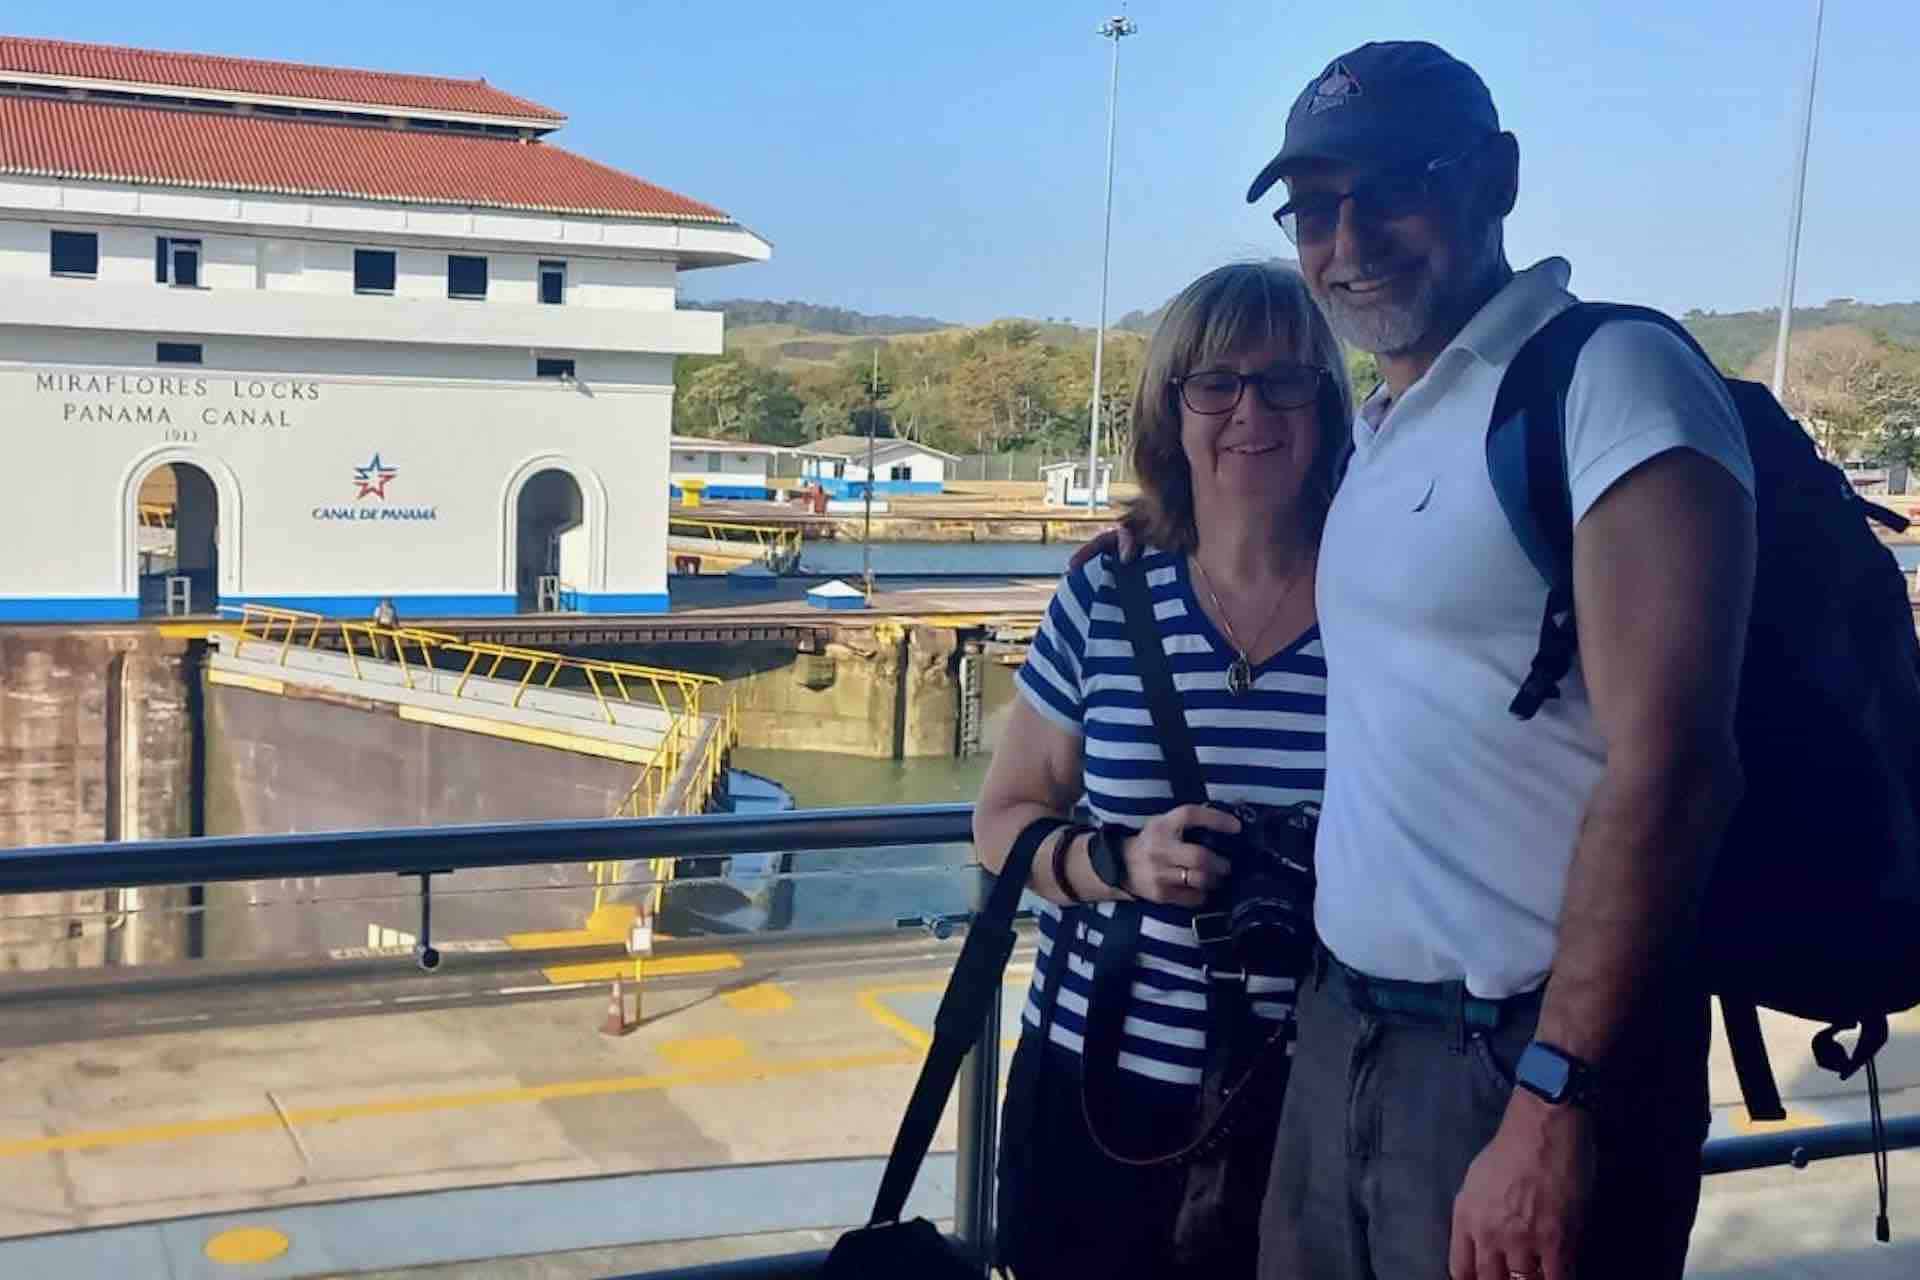 Panama City Panama Canal tour couple in miraflores locks